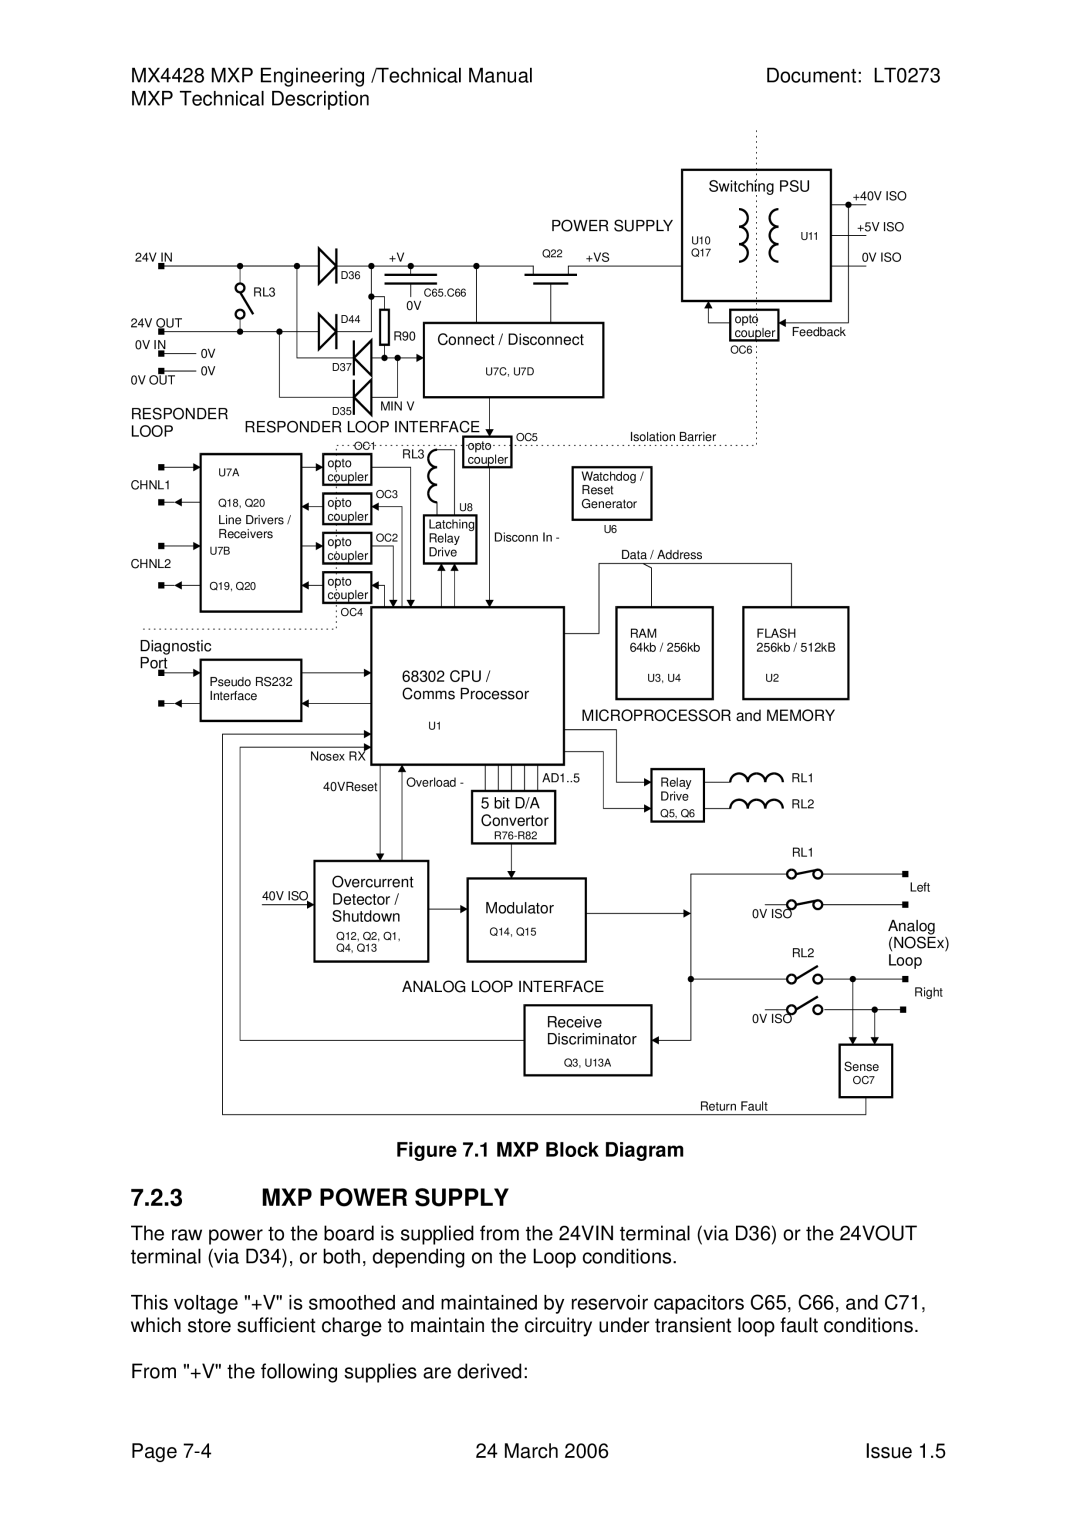 Tyco MX4428 technical manual MXP Power Supply, MXP Block Diagram 